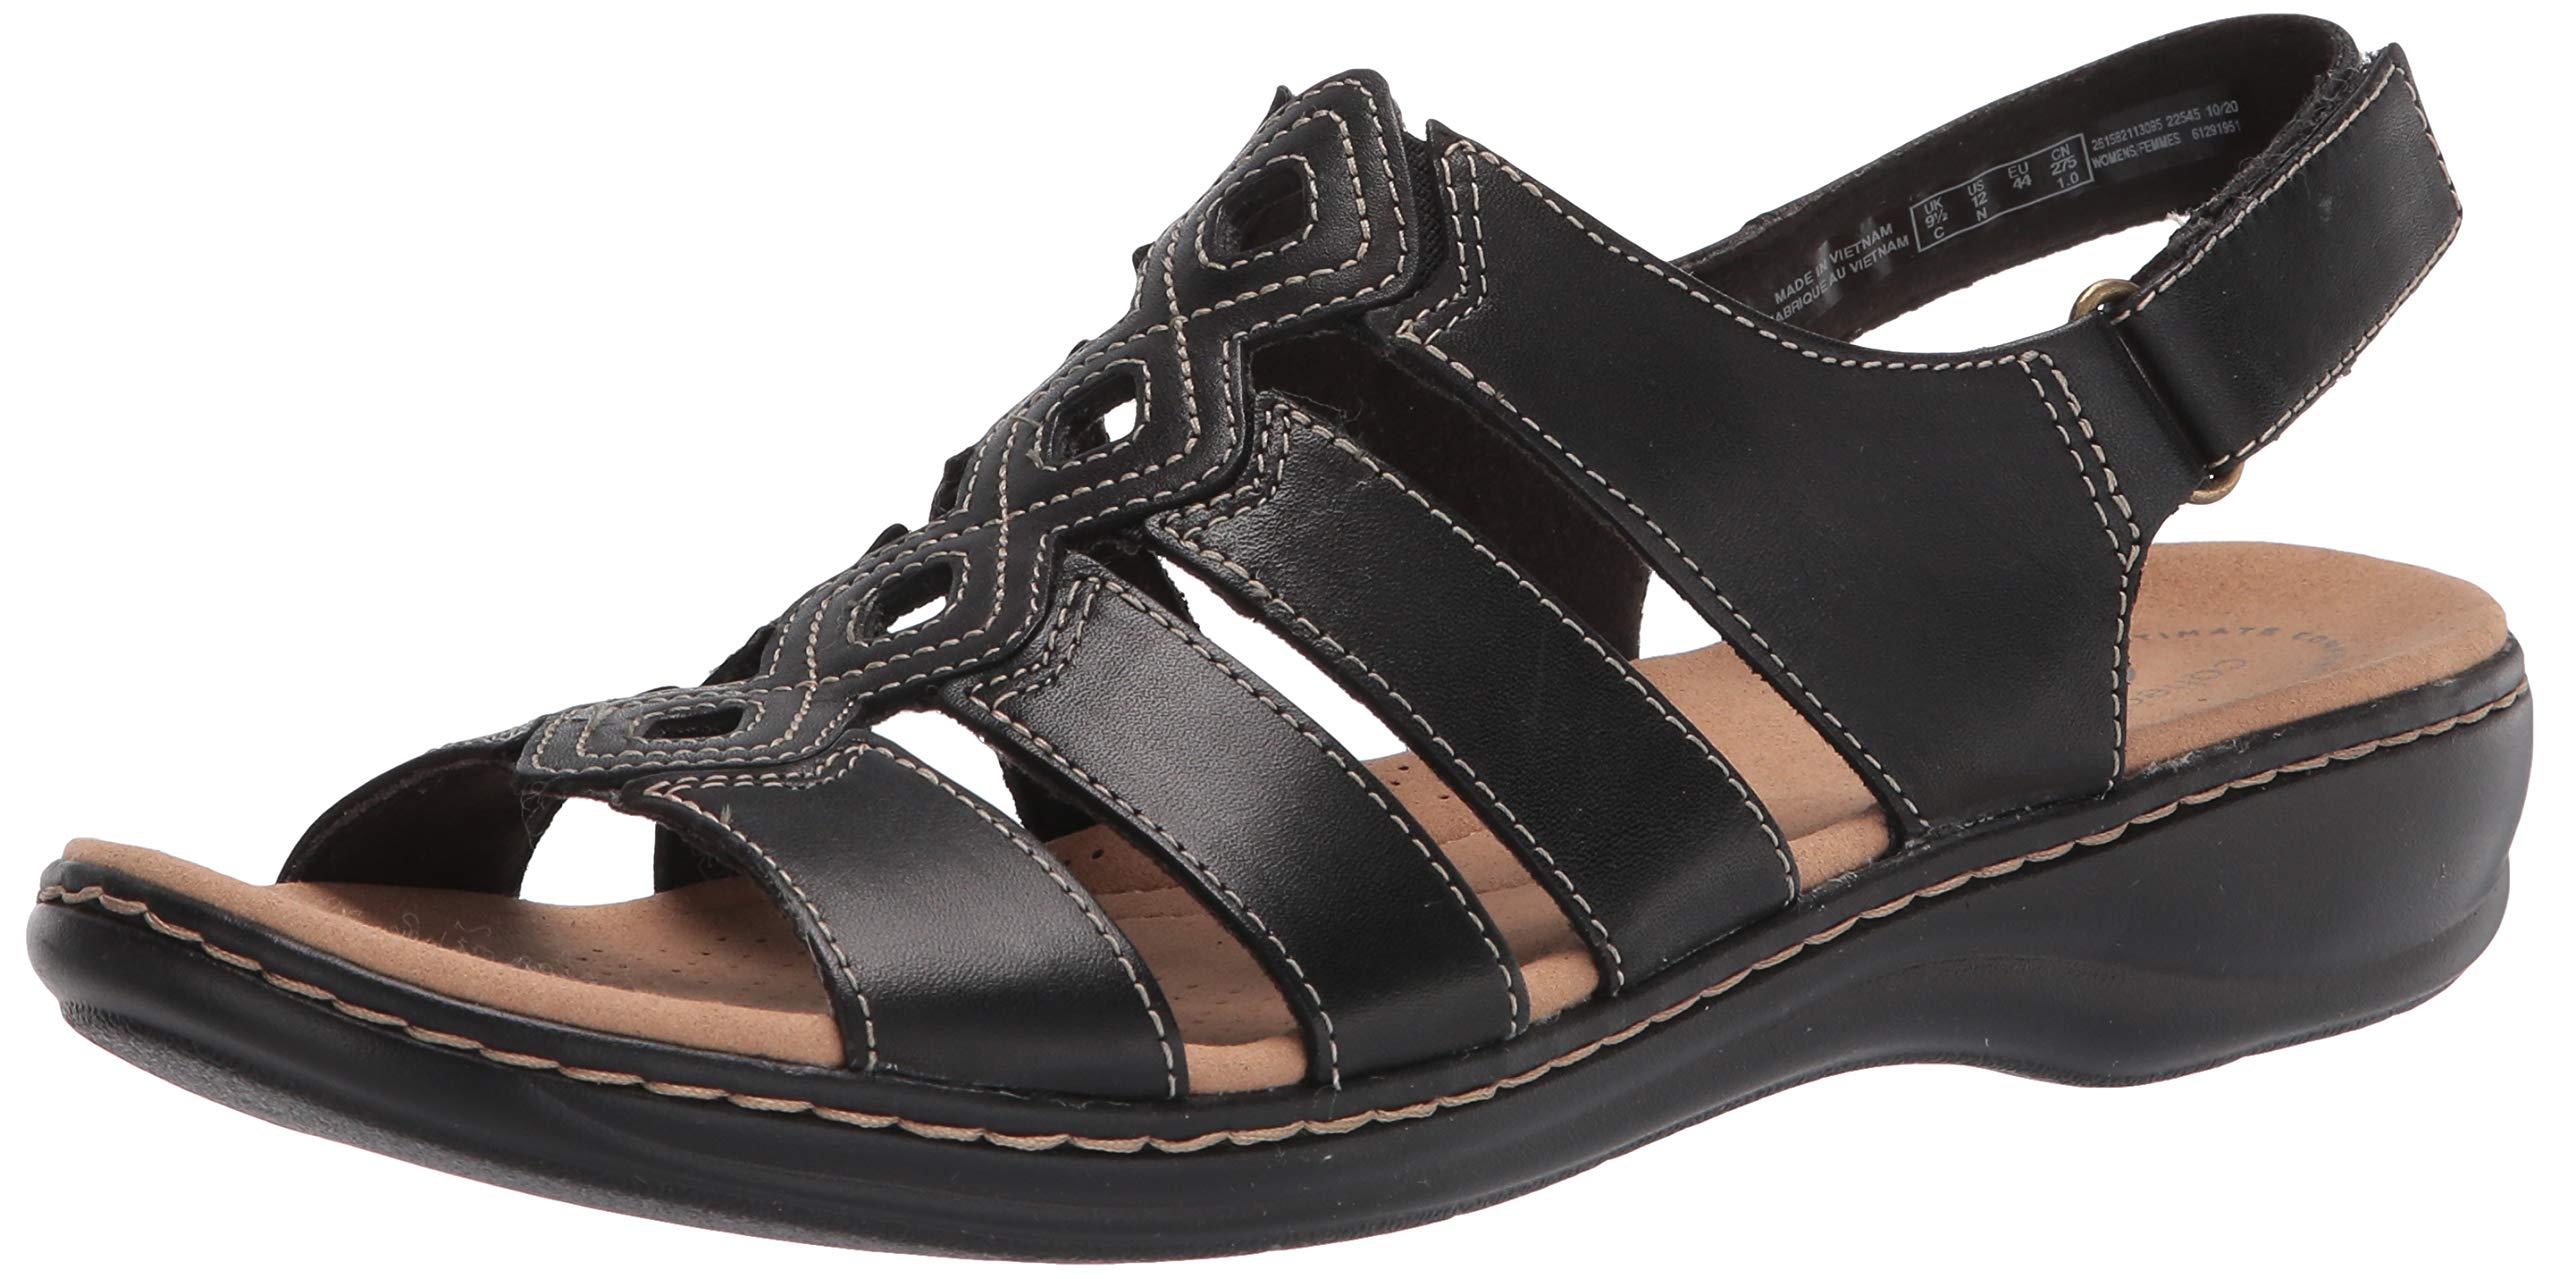 Clarks Leisa Ruby Flat Sandal in Black Leather (Black) - Save 39% | Lyst